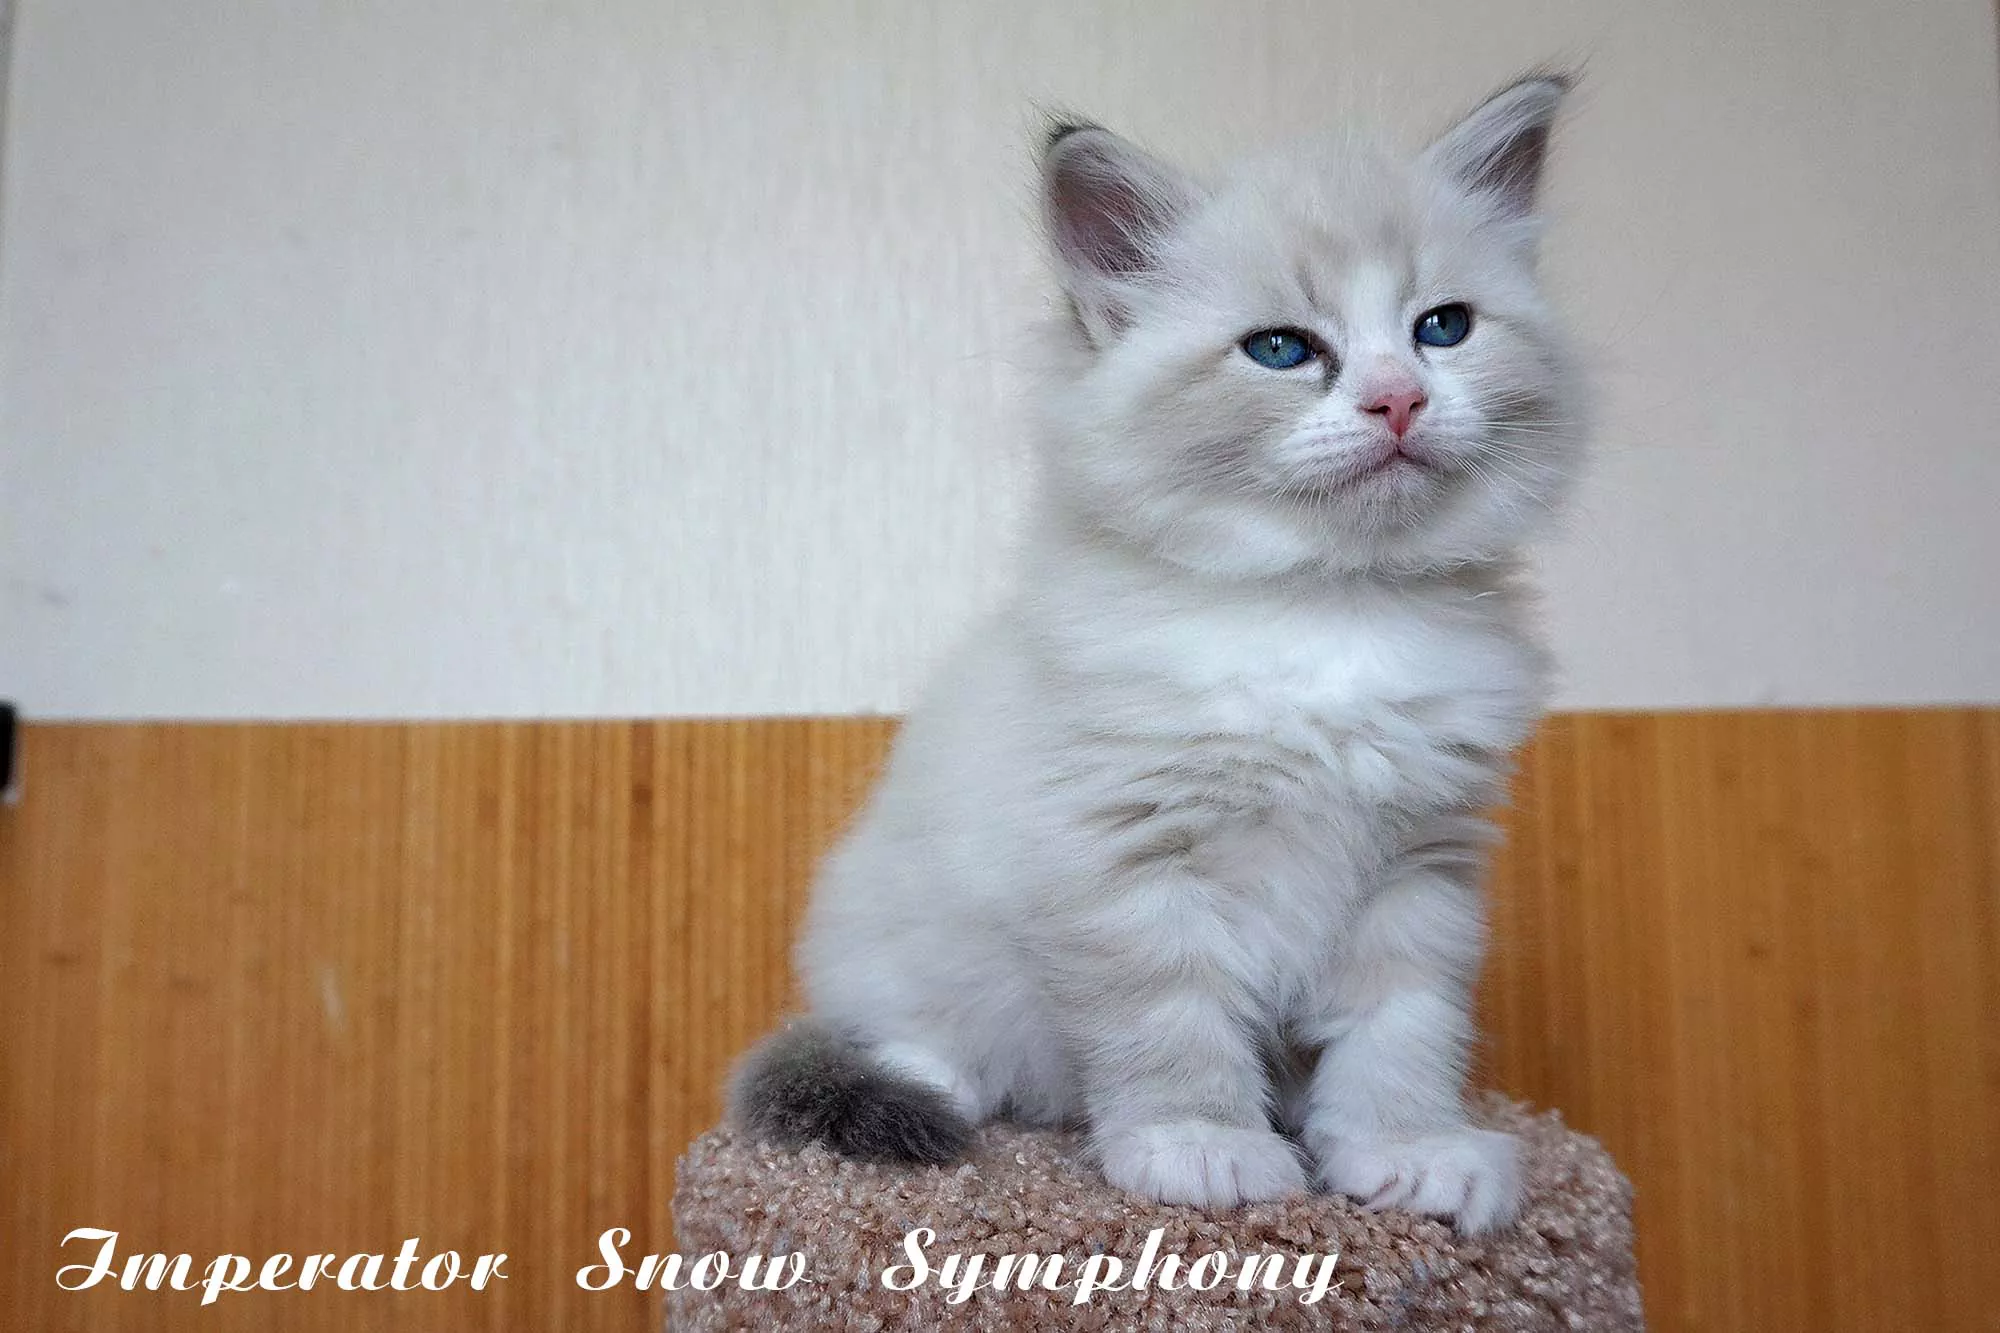 Imperator Snow Symphony